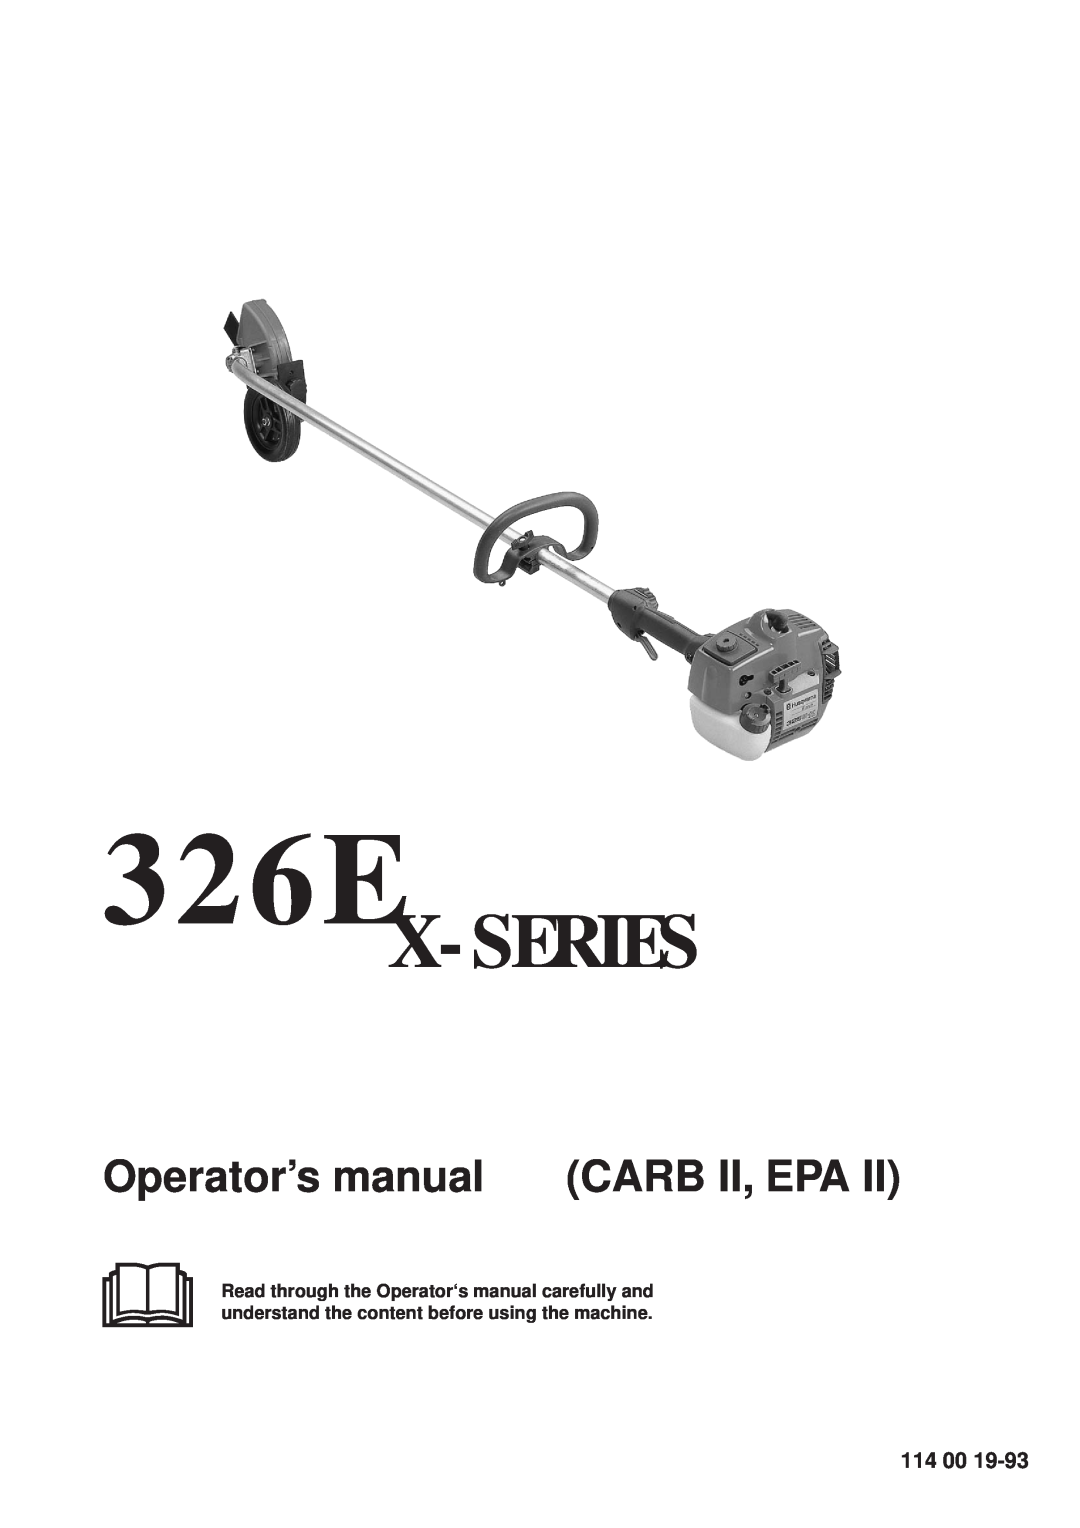 Husqvarna manual 326EX-SERIES, Operator’s manual CARB II, EPA 